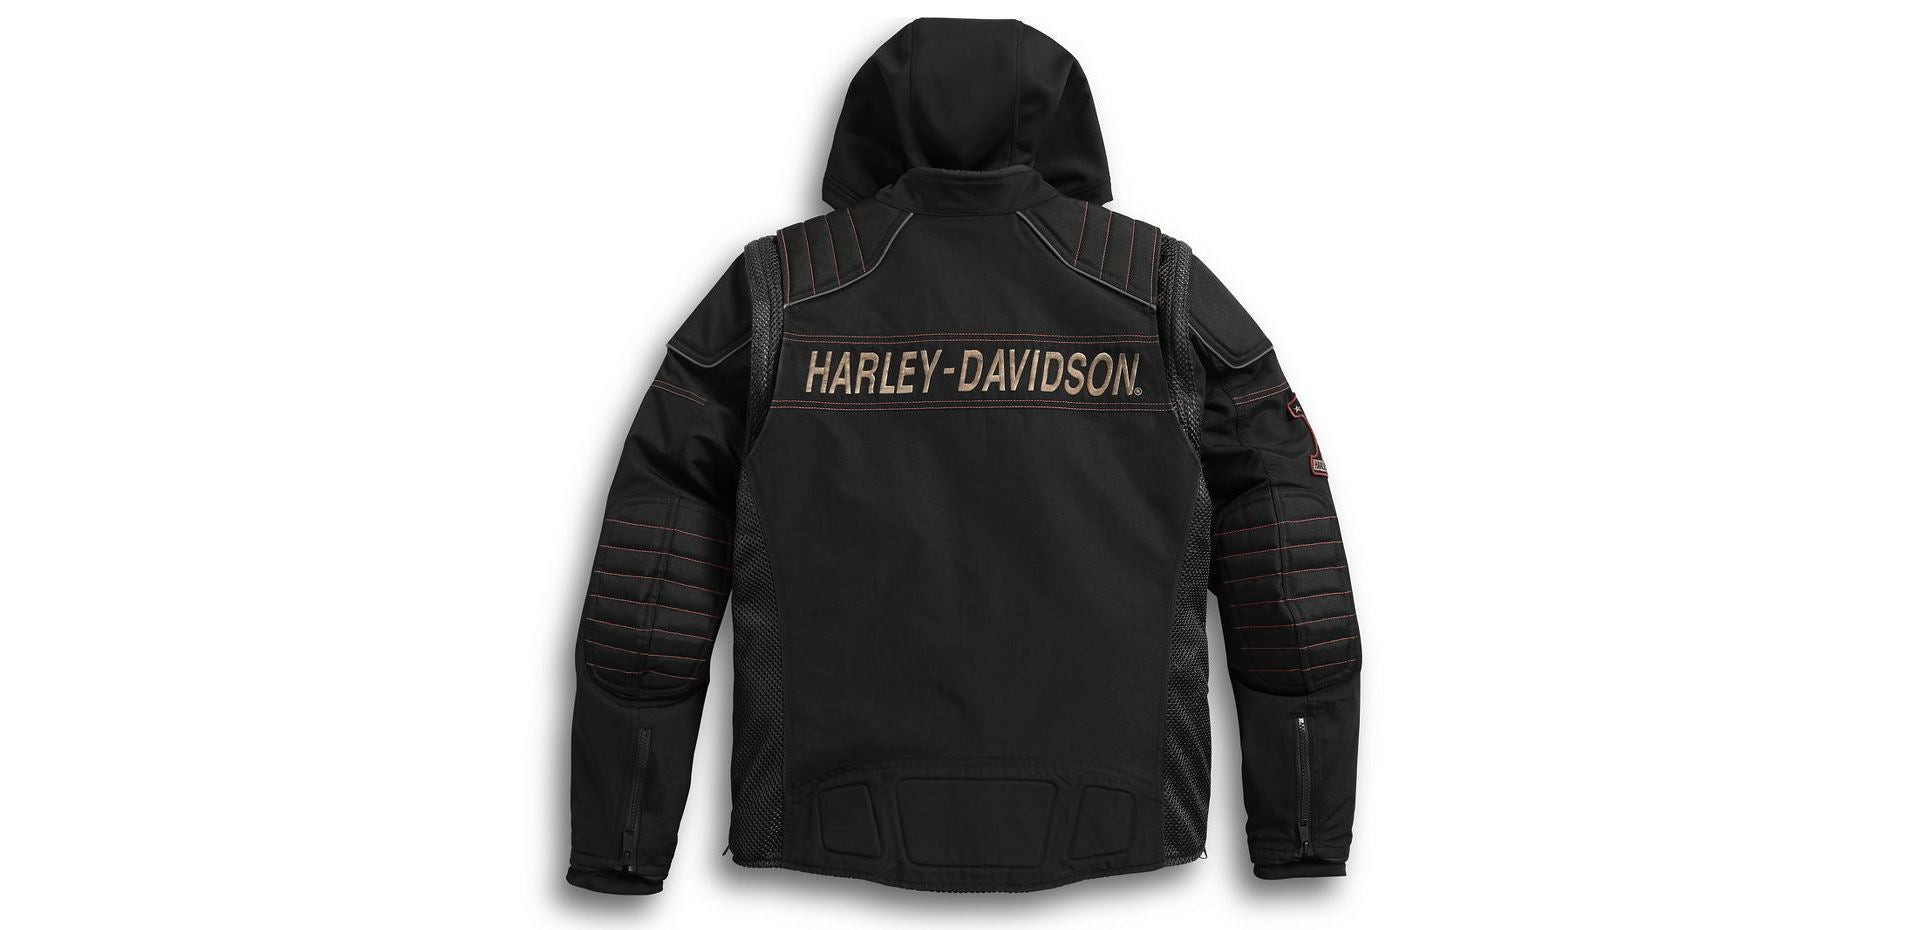 Harley-Davidson Men's Sully 3-in-1 Convertible Mesh Jacket - 98176-17VM